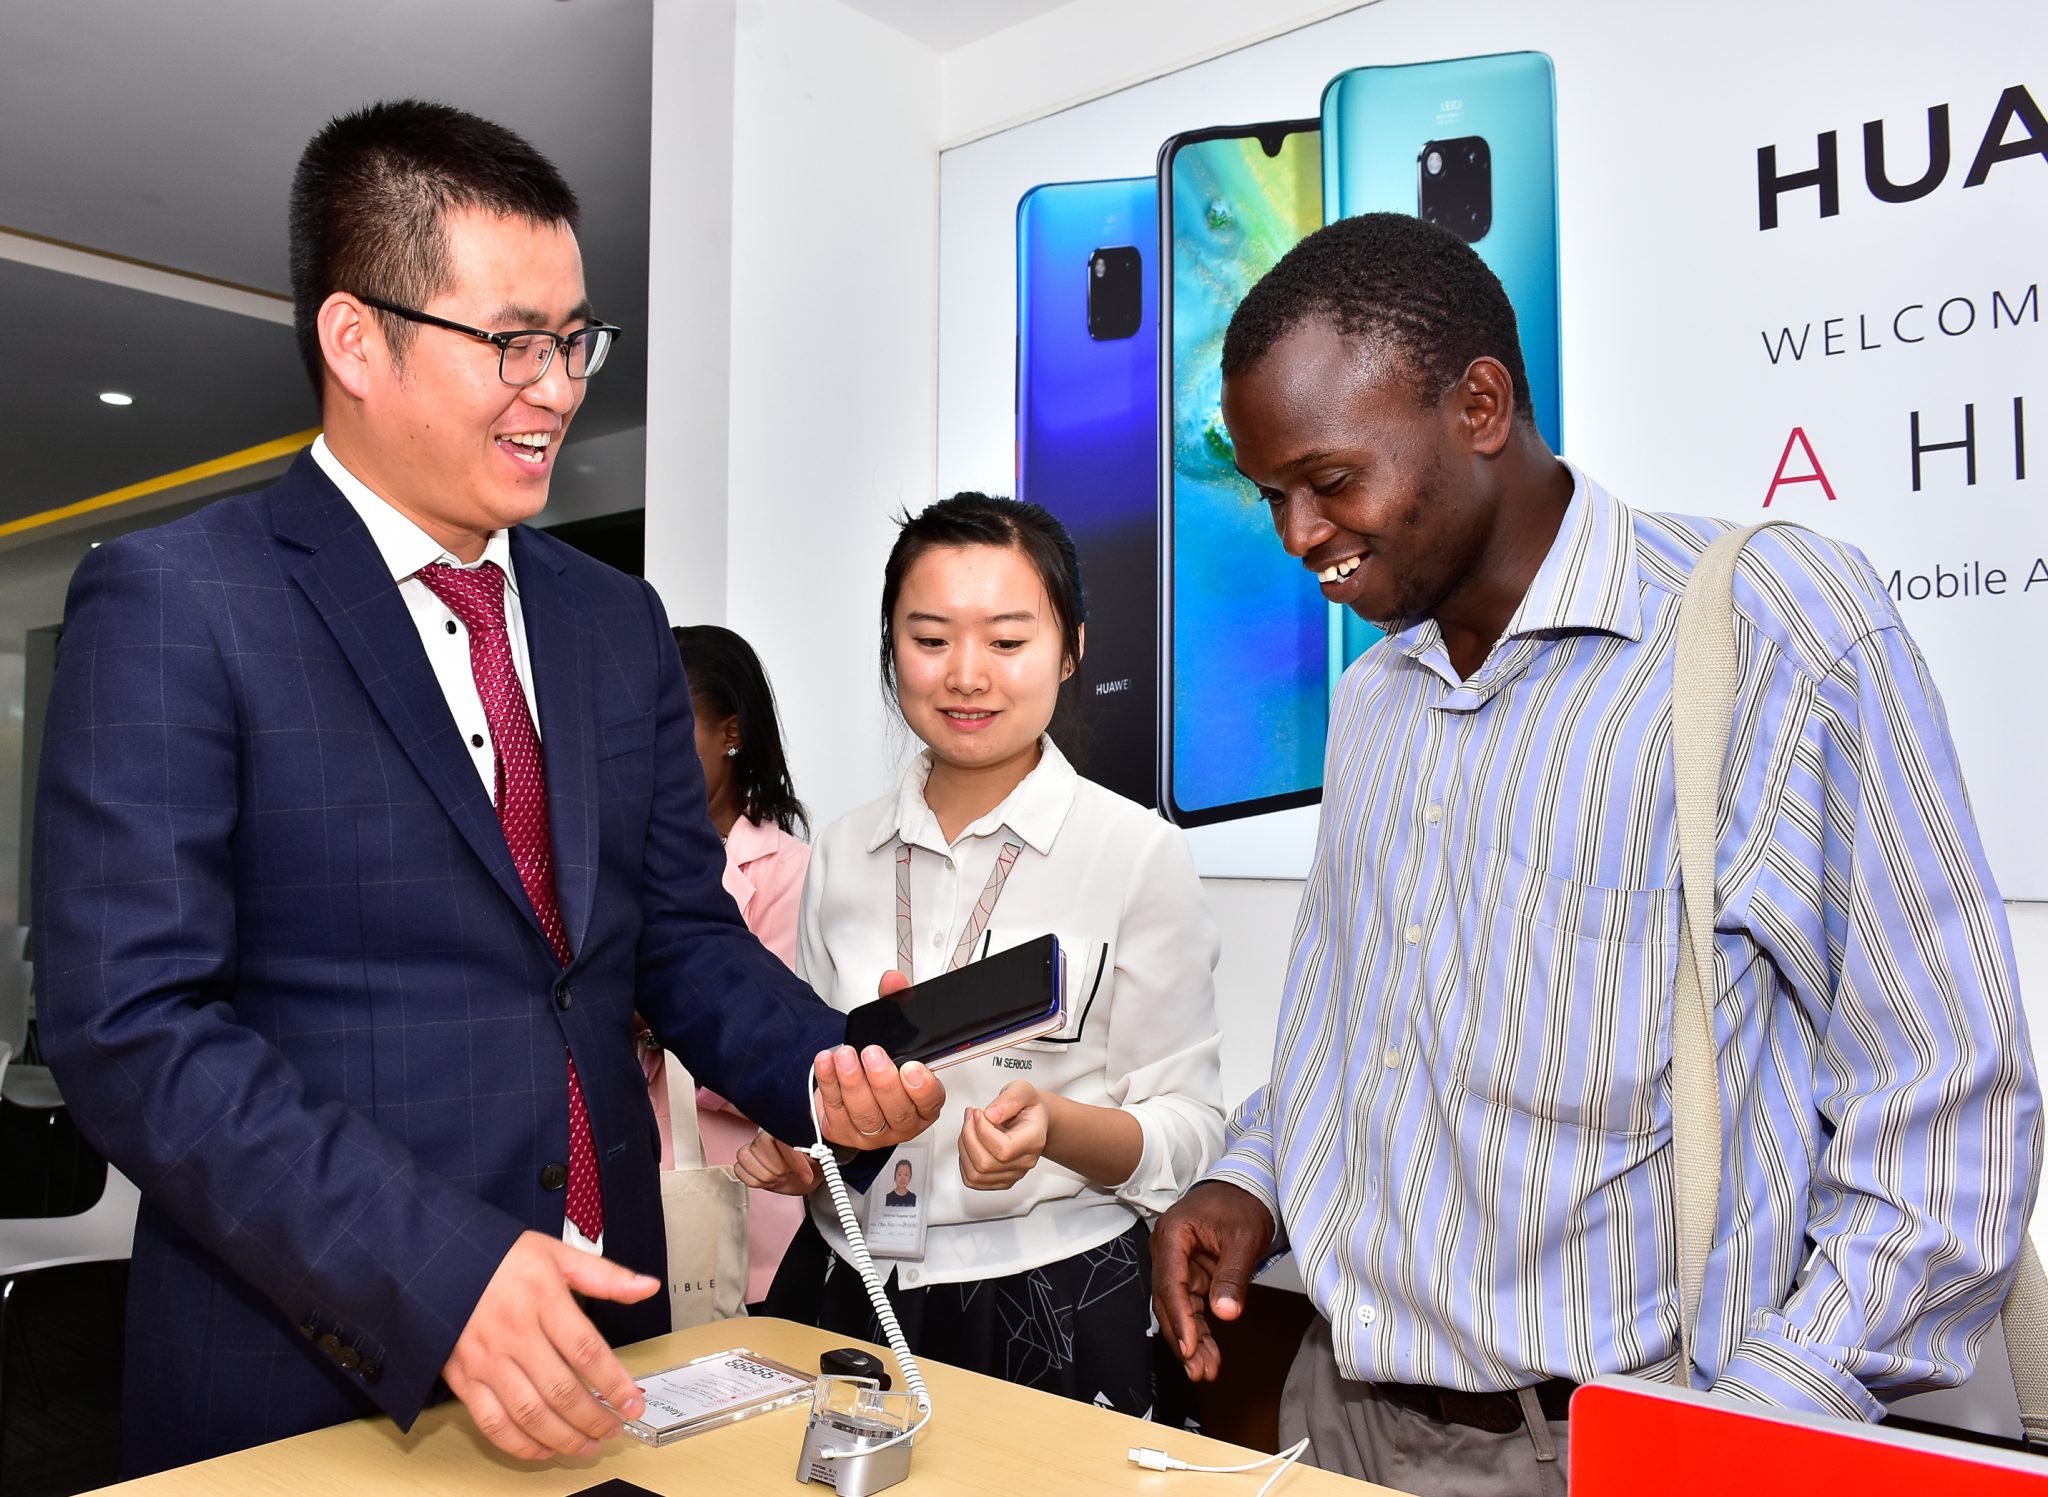 From left to right, Steven Li, Huawei's Head of Eastern